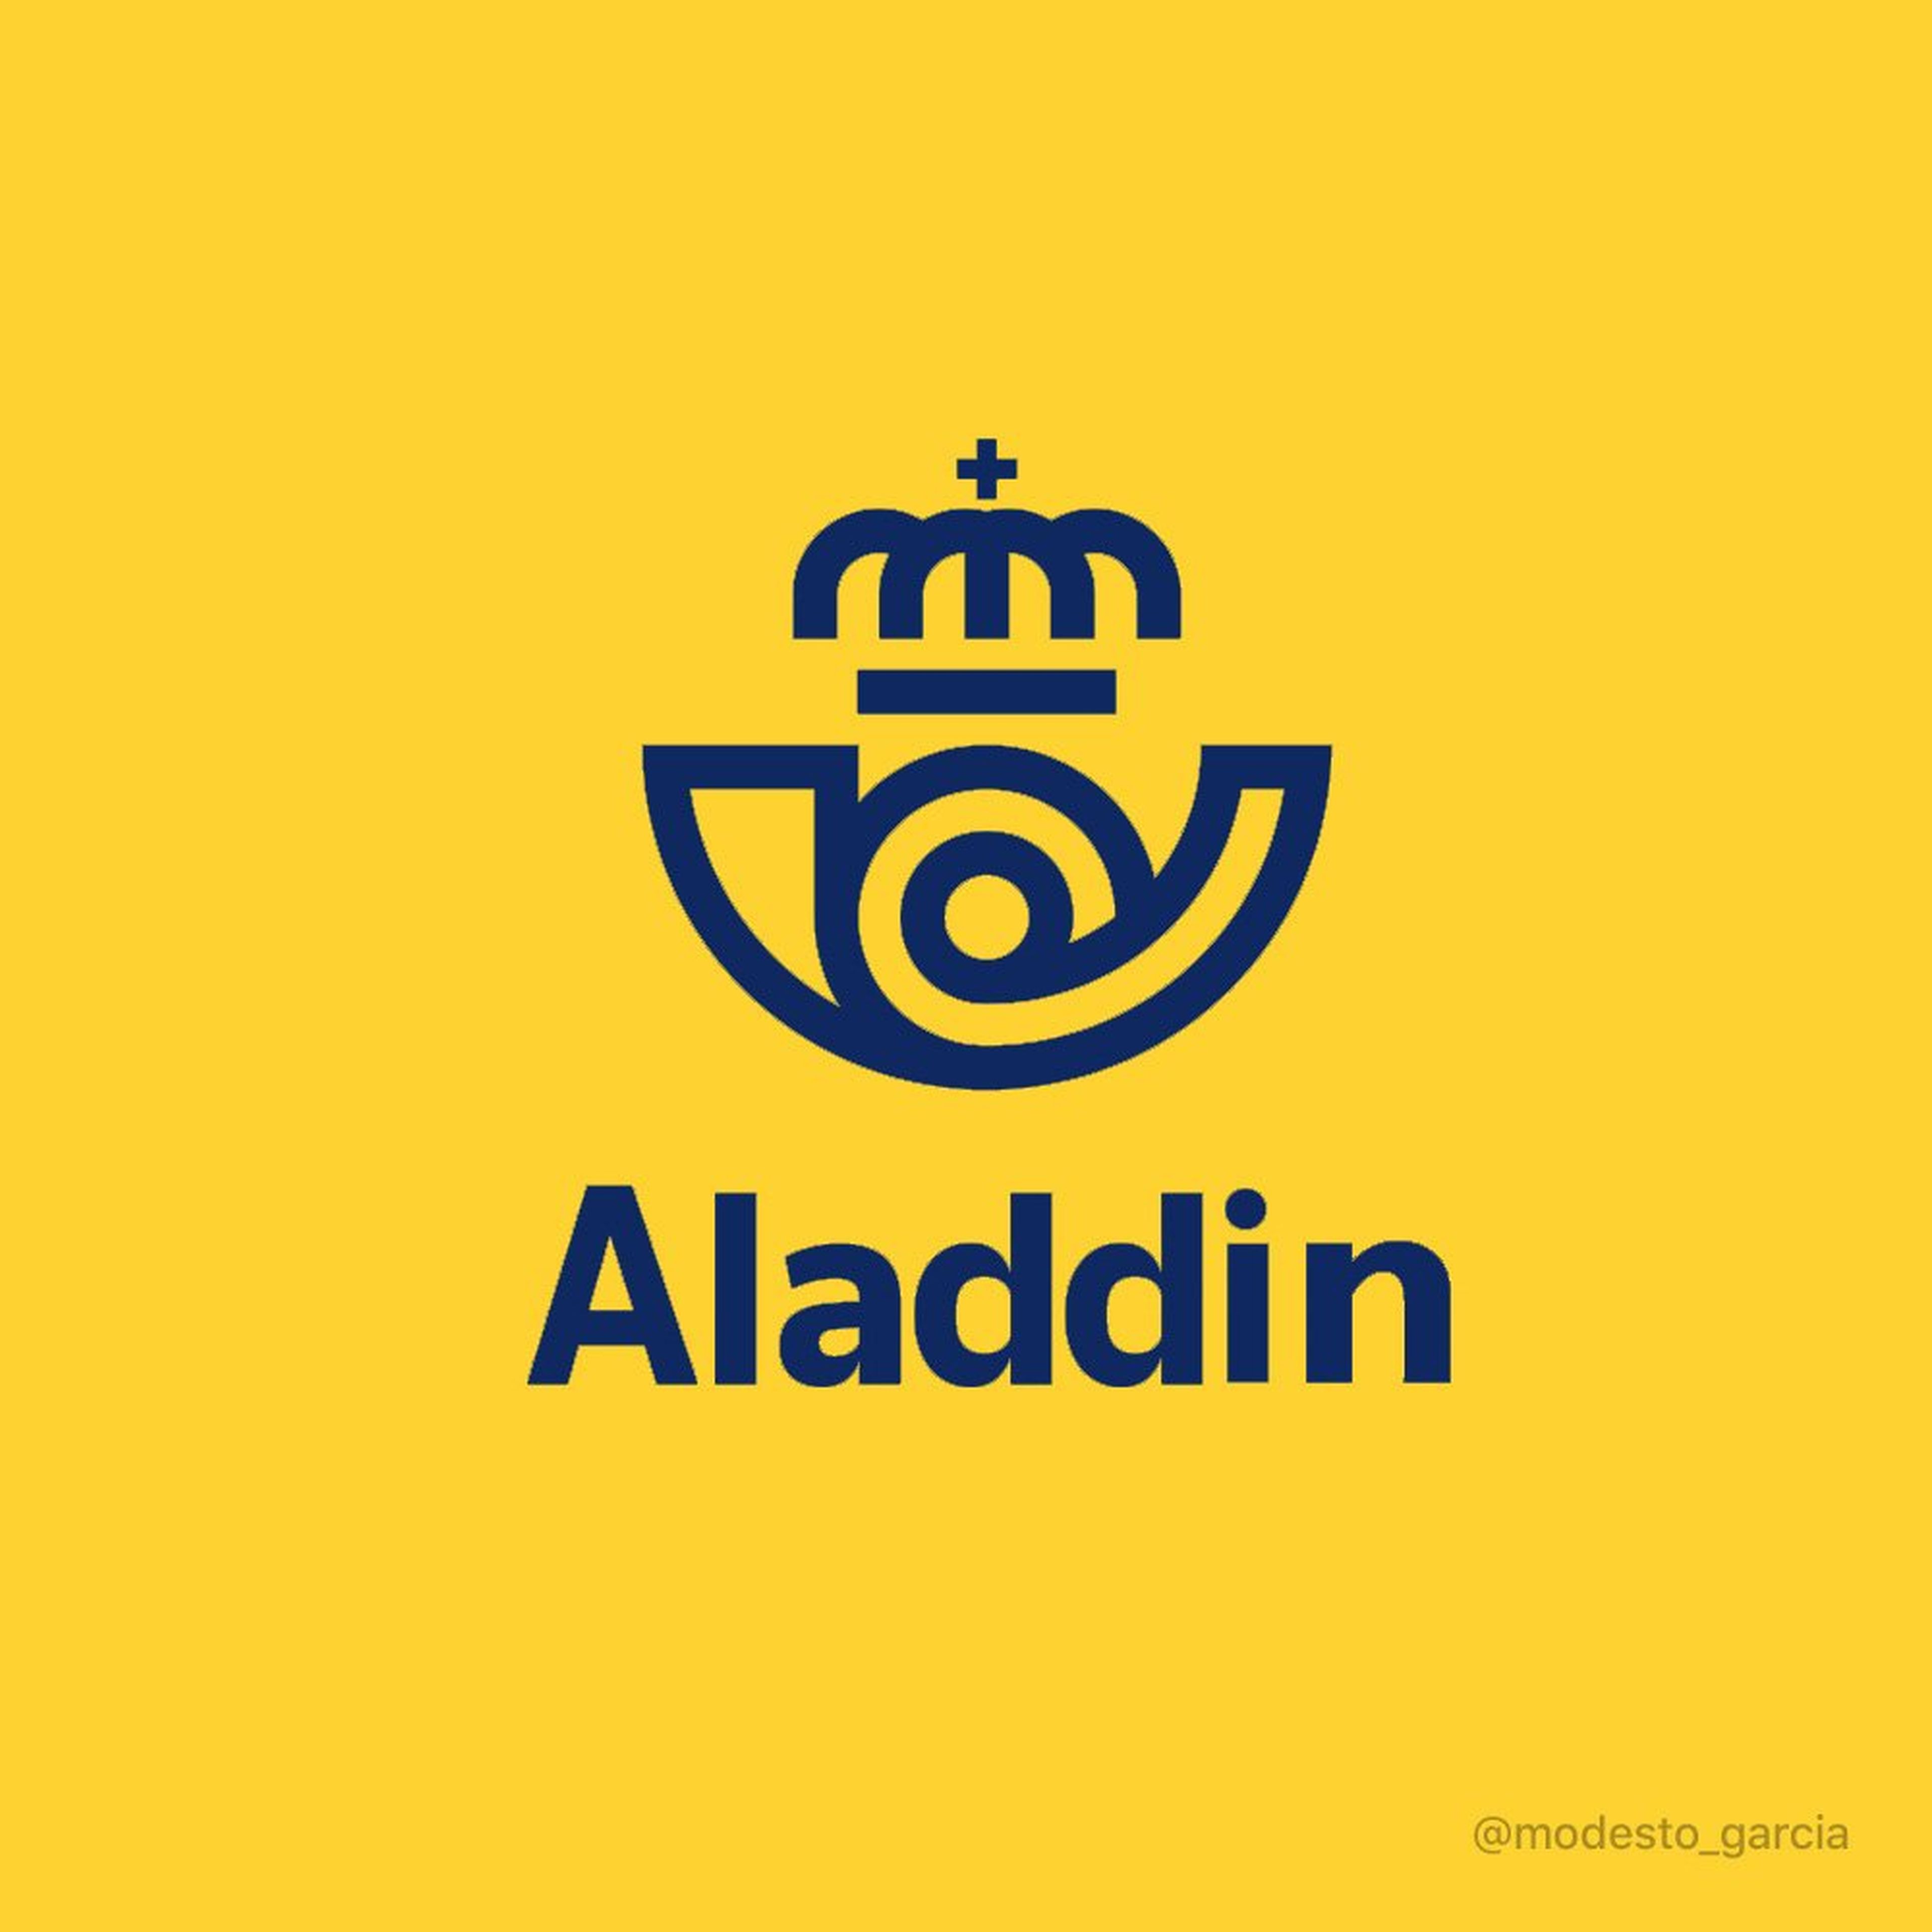 Si Aladdin fuera un logo